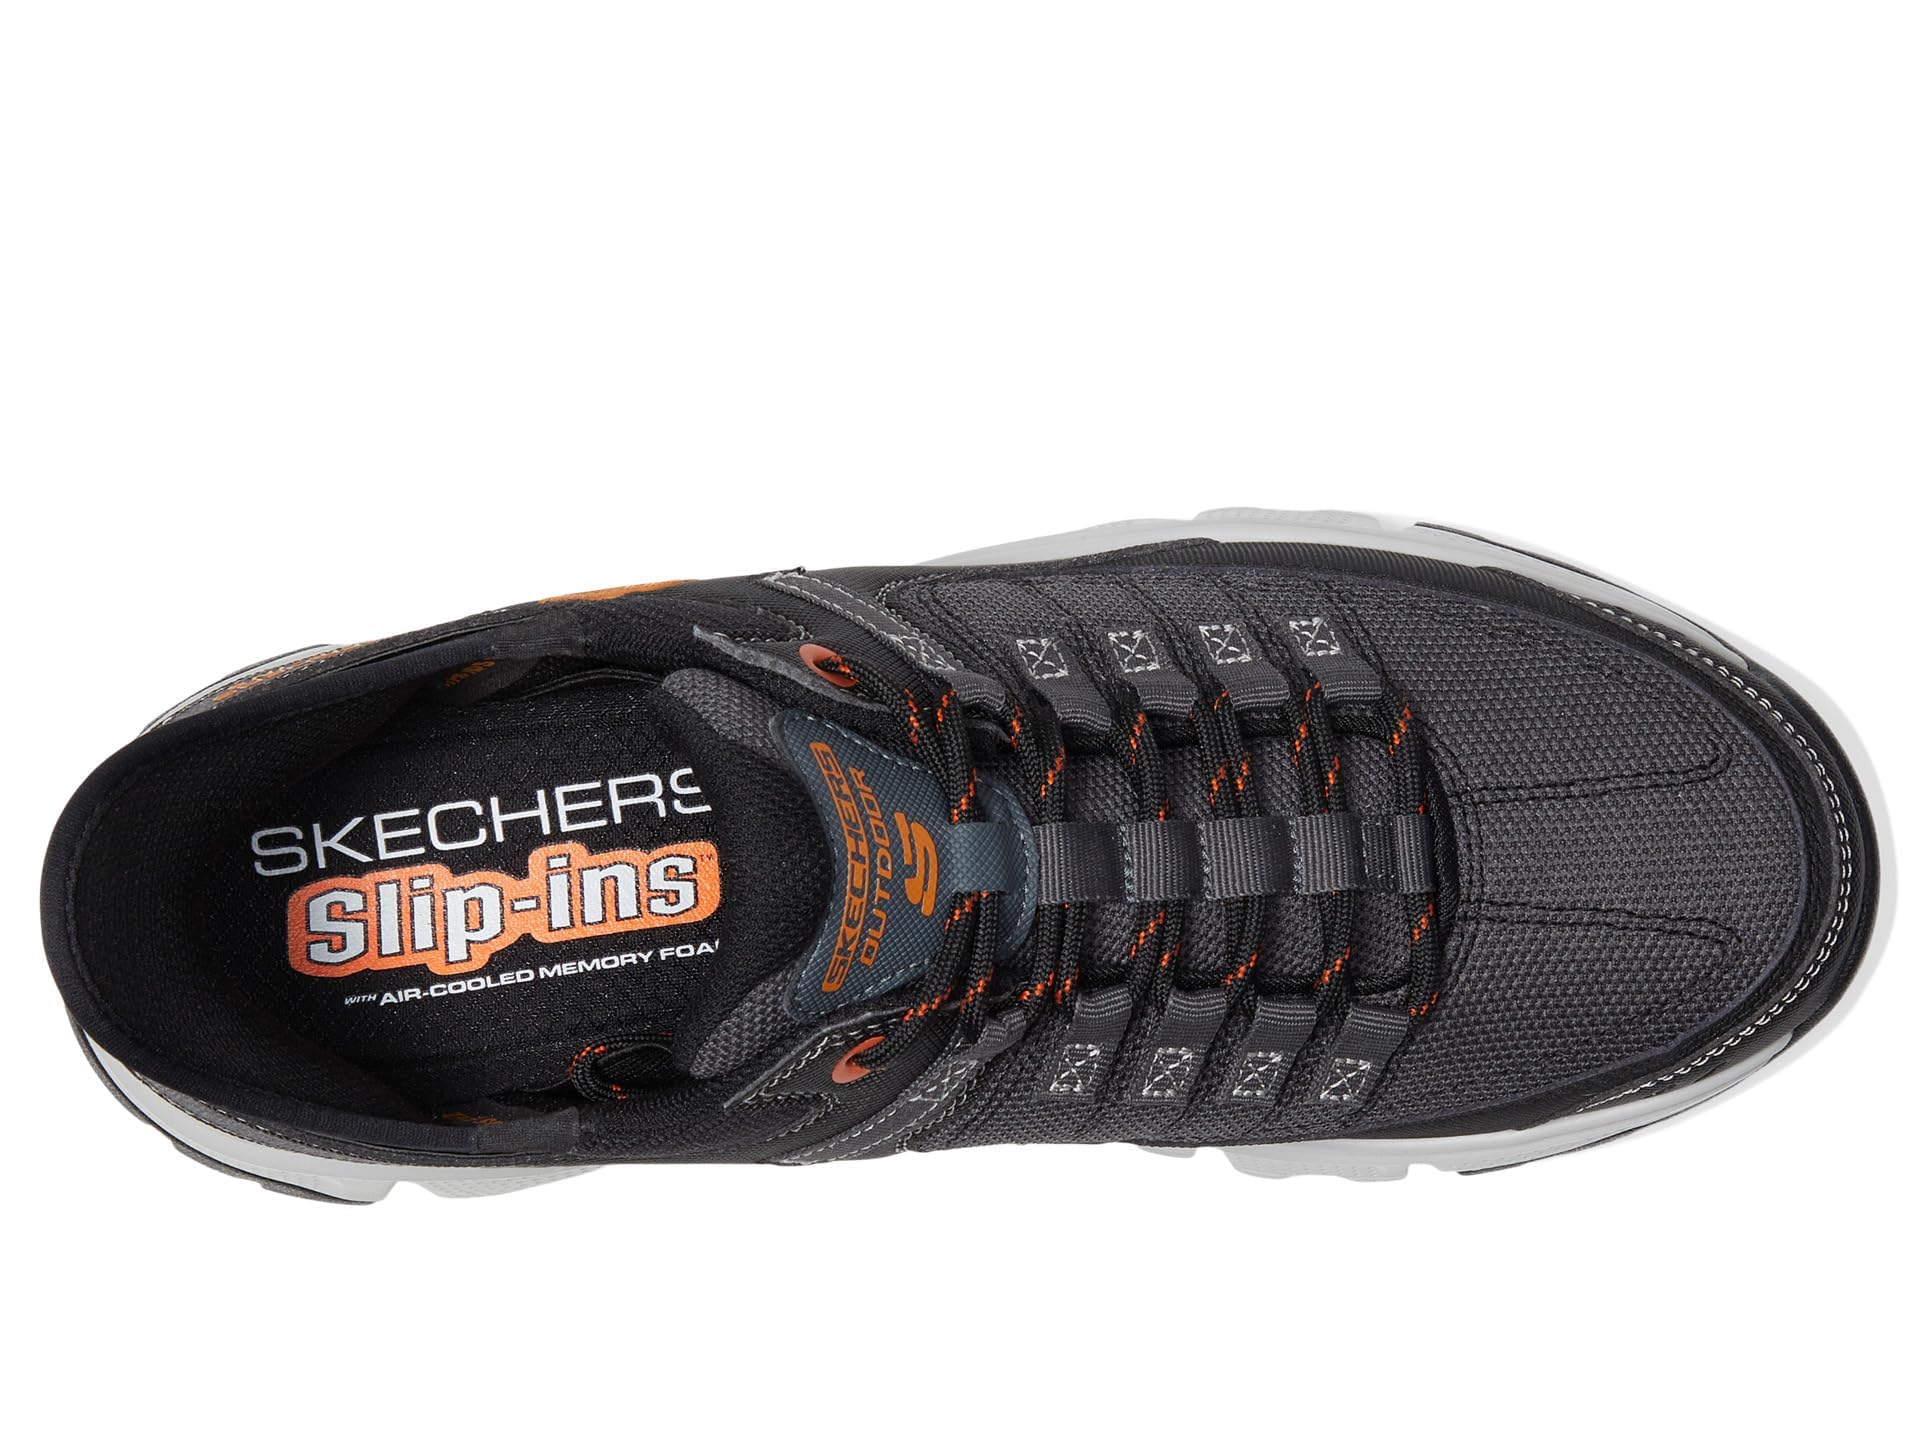 Skechers Men's Summits at Hands Free Slip-in Sneaker